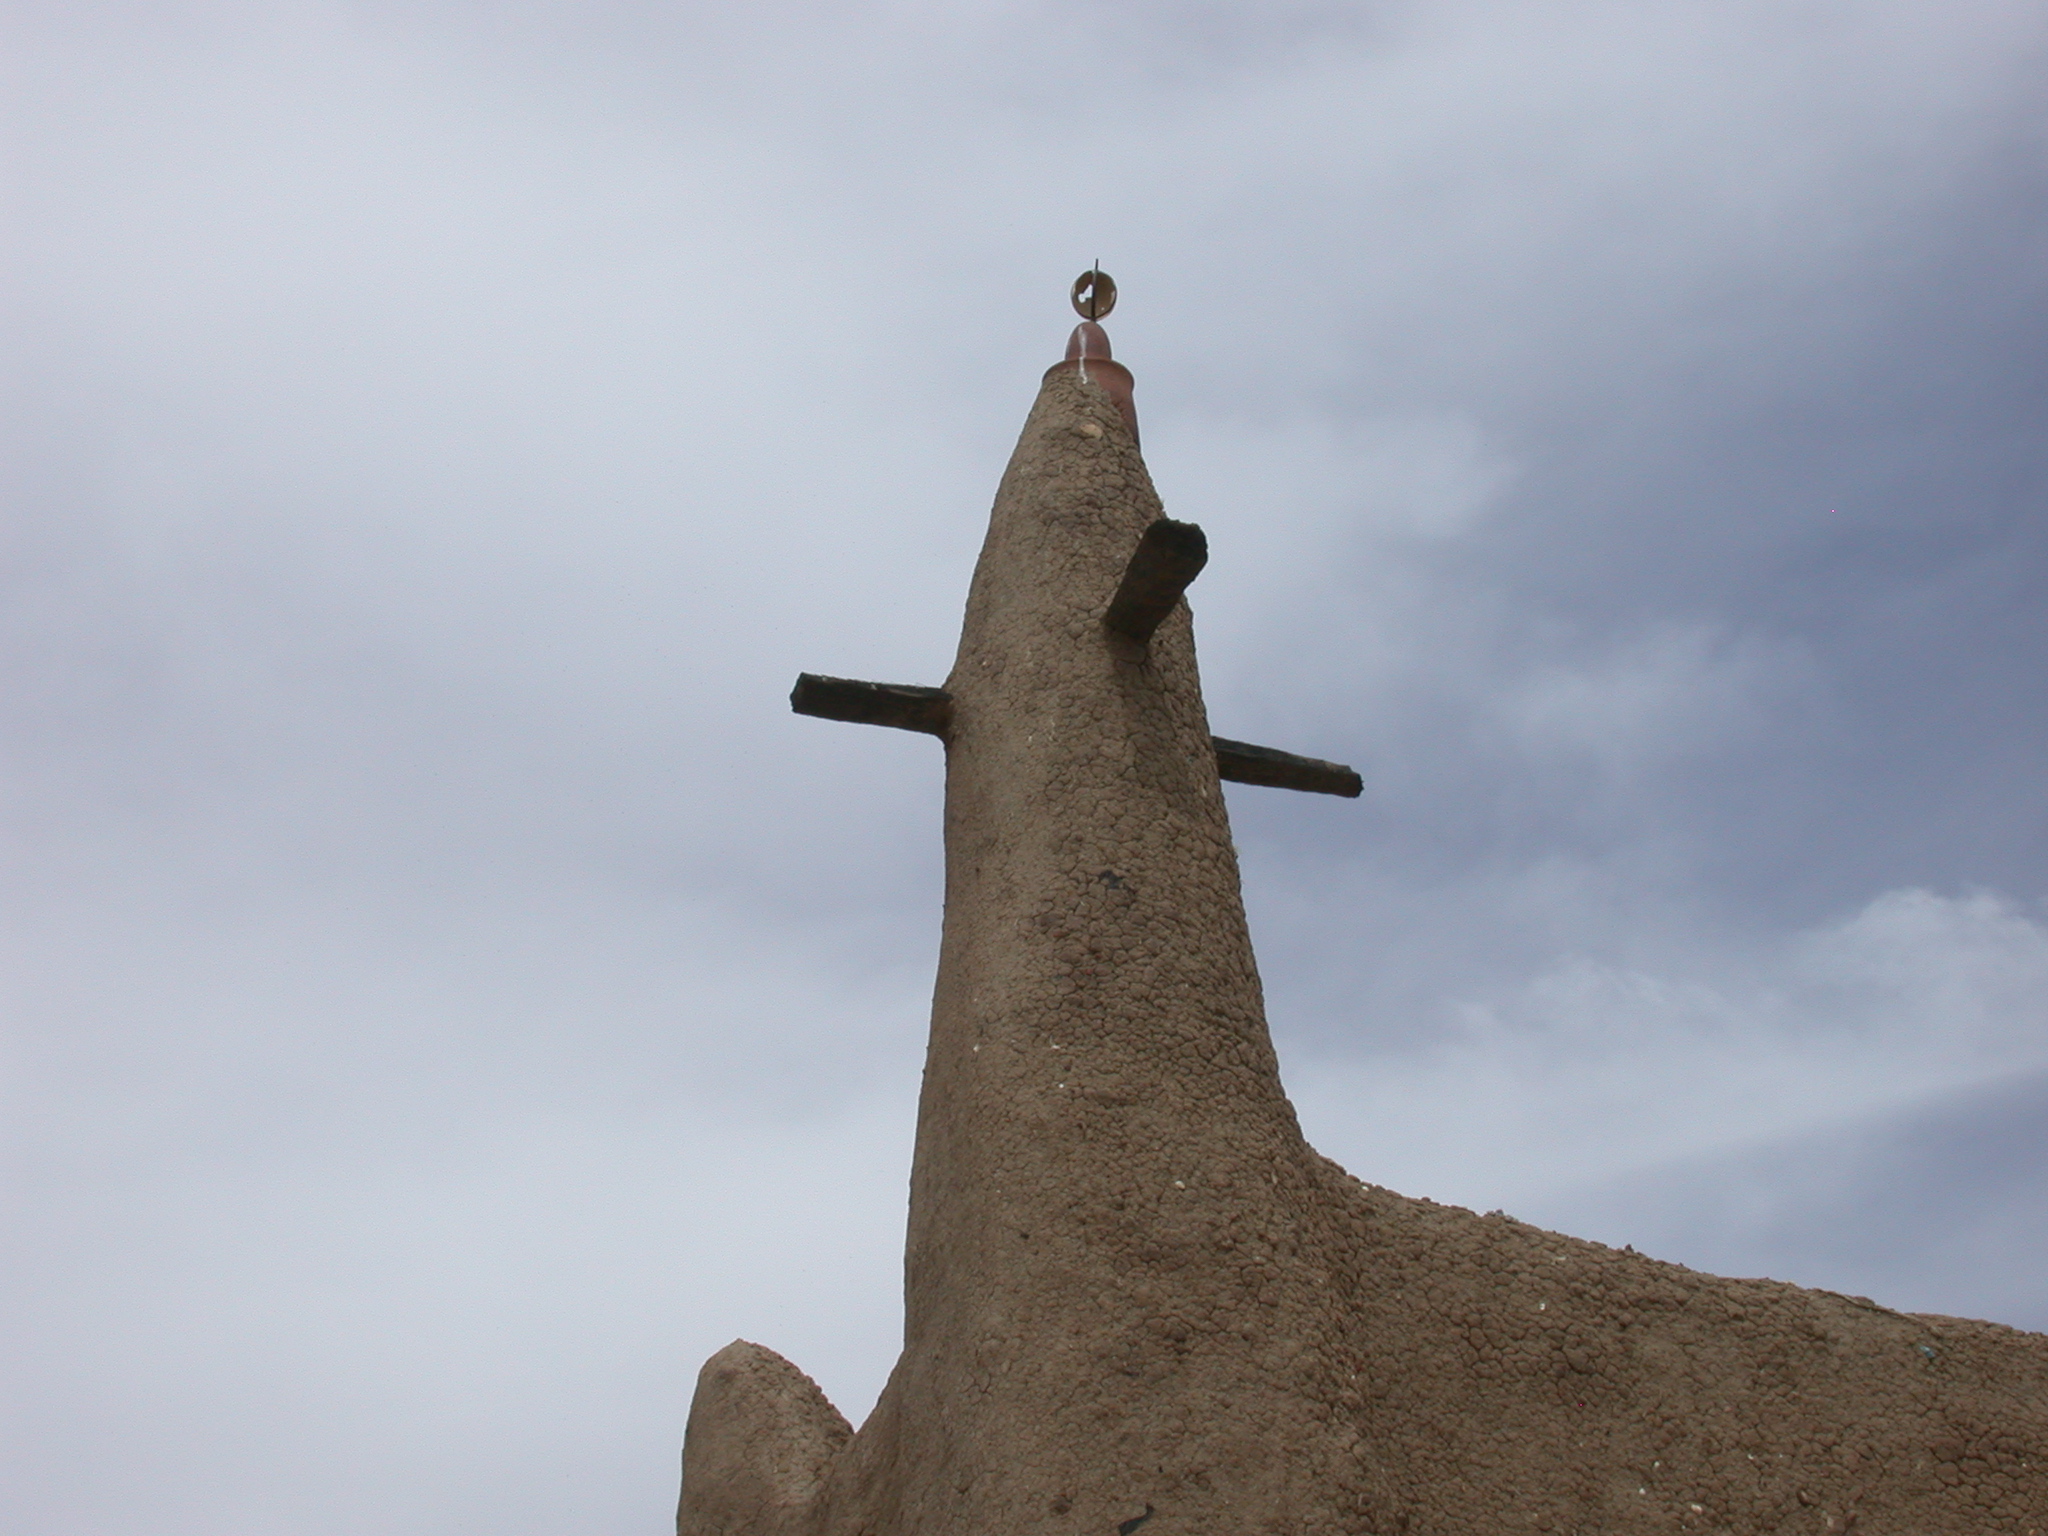 Ostrich Egg on Minaret of Mosque in Jenne, Mali